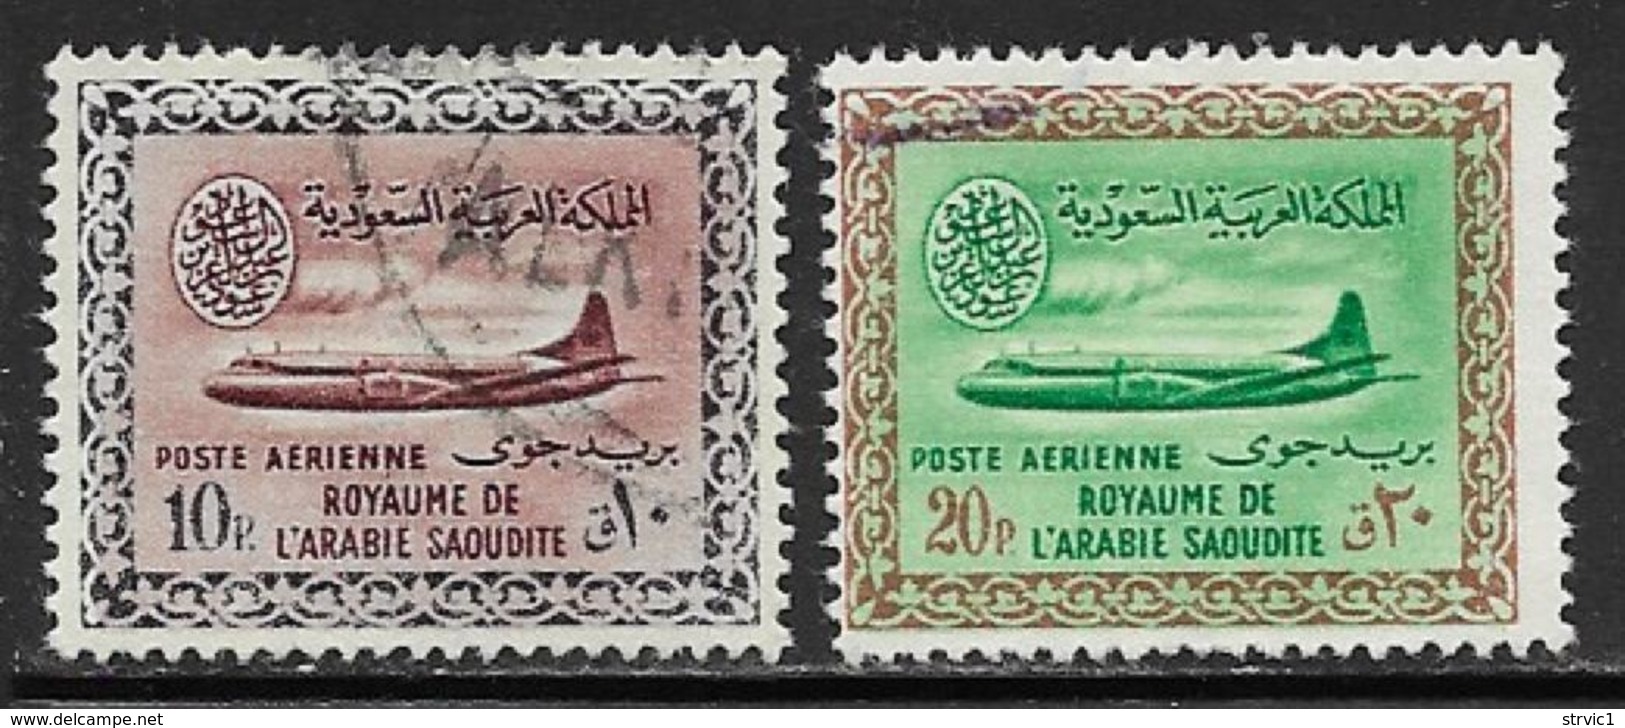 Saudi Arabia Scott # C15,C17 Used Convair, 1960 - Saudi Arabia